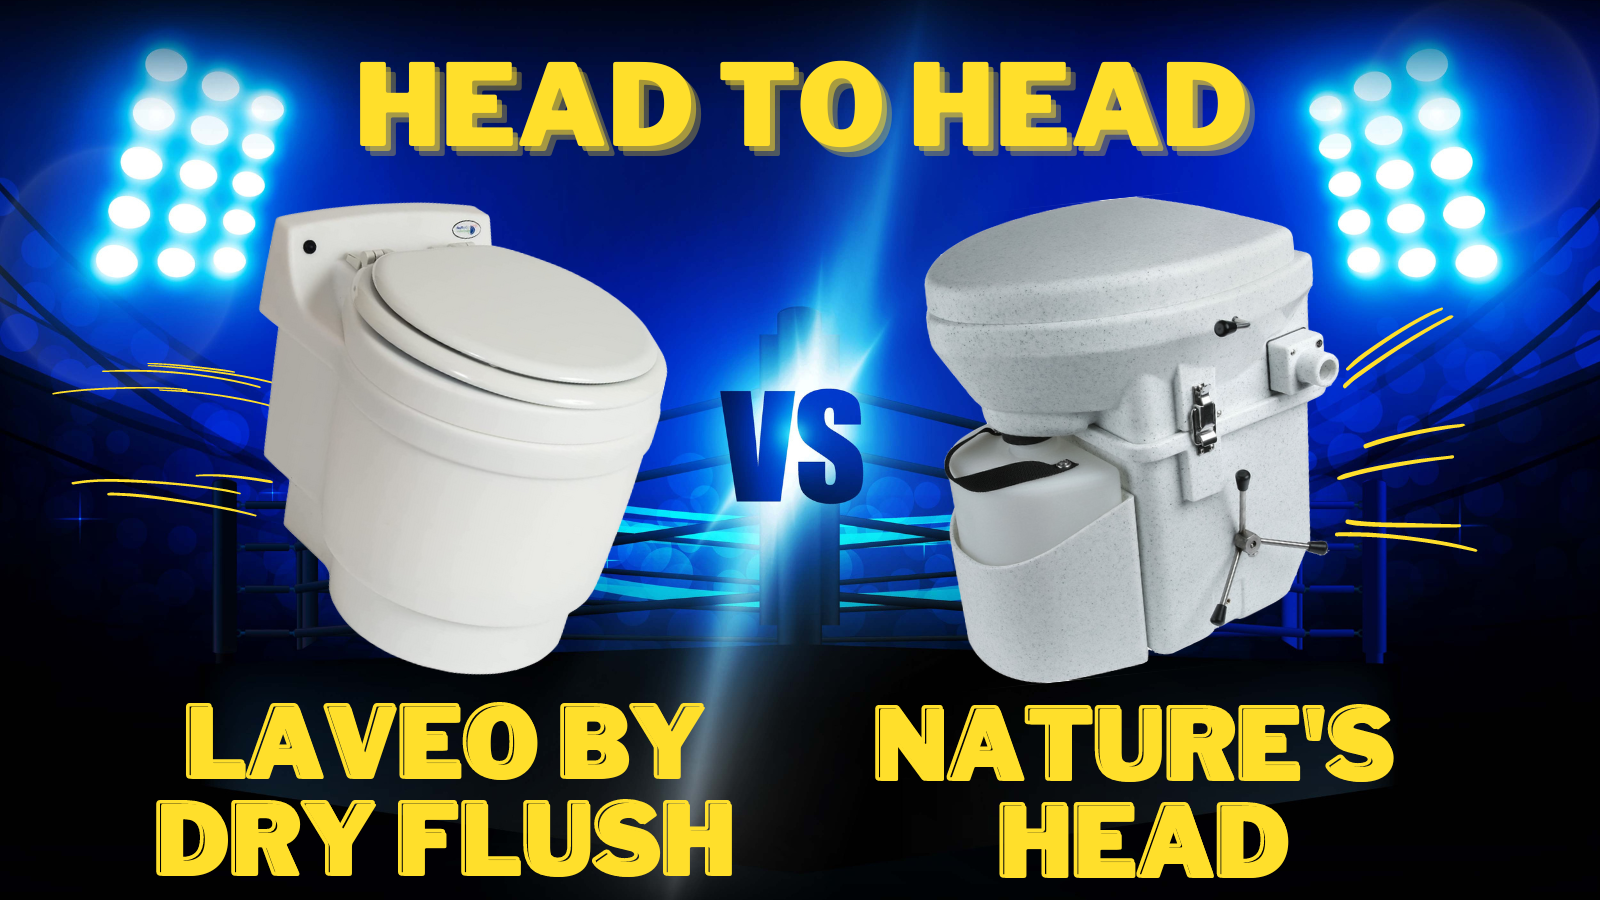 Head to Head Mini Guides: Nature's Head versus Laveo by Dry Flush